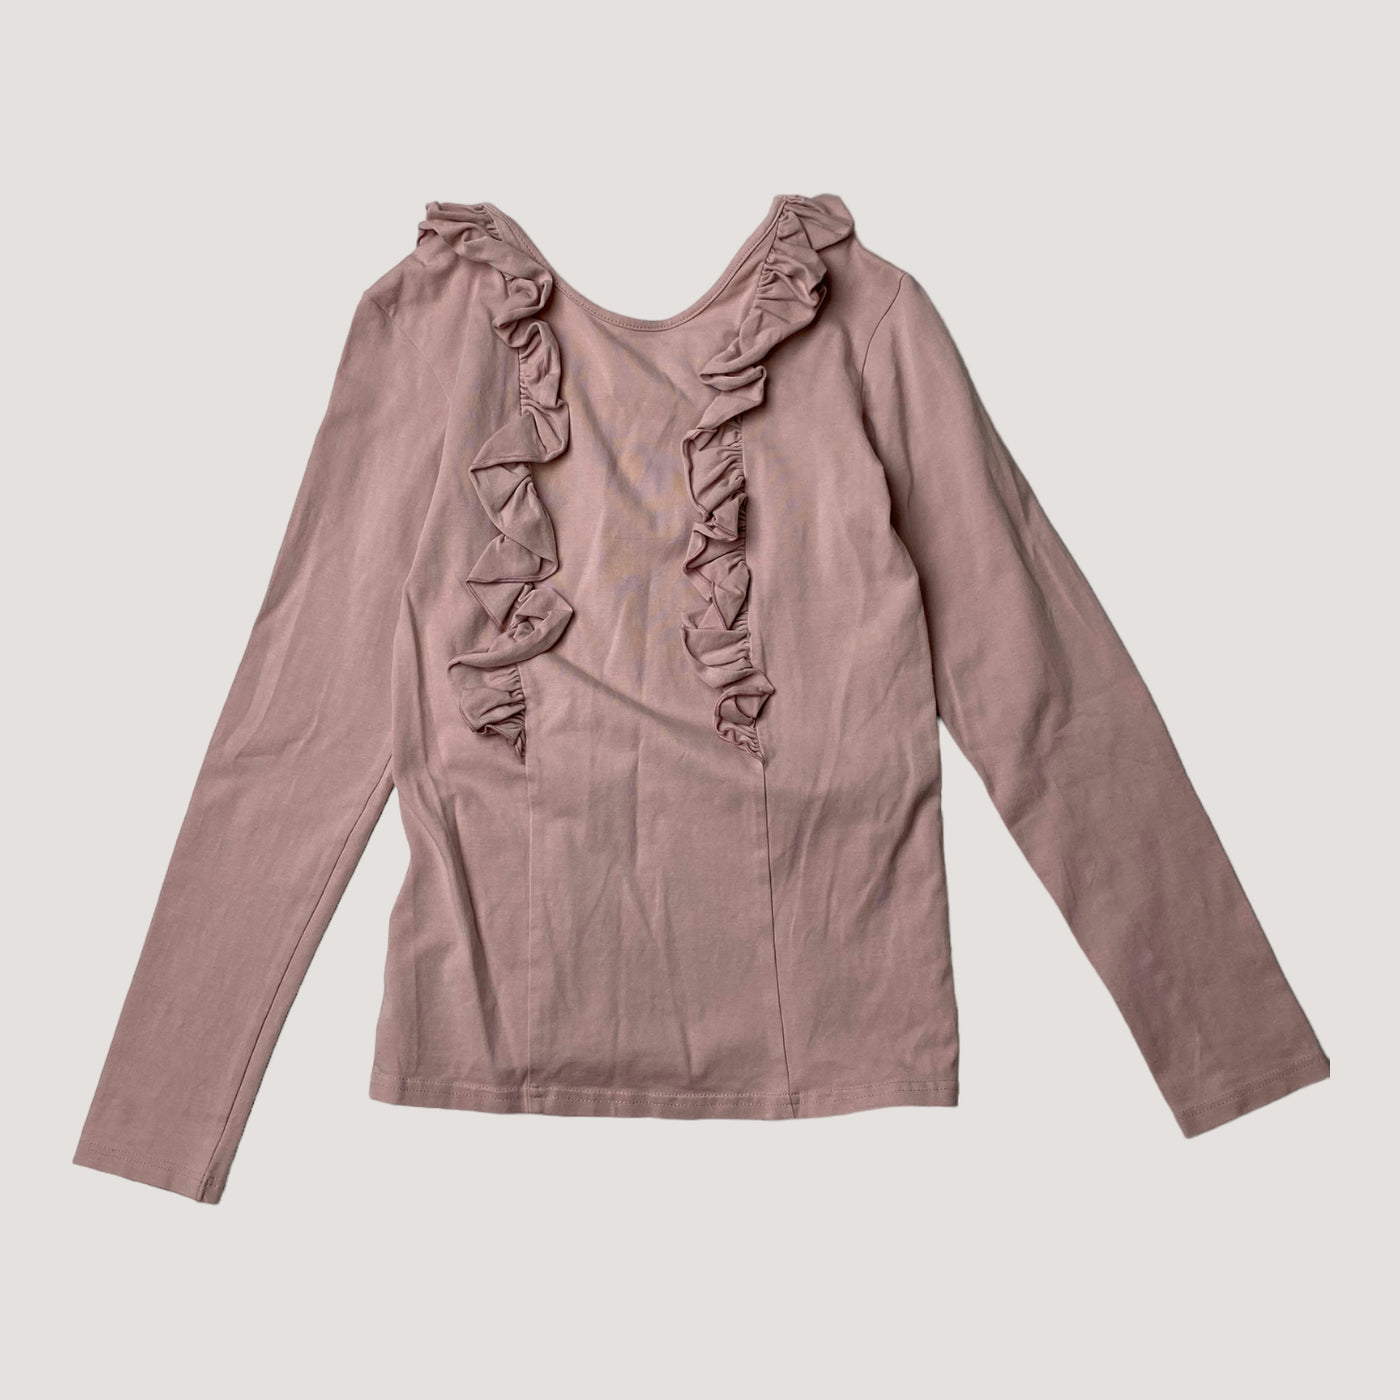 Gugguu frill shirt, pink | 152cm